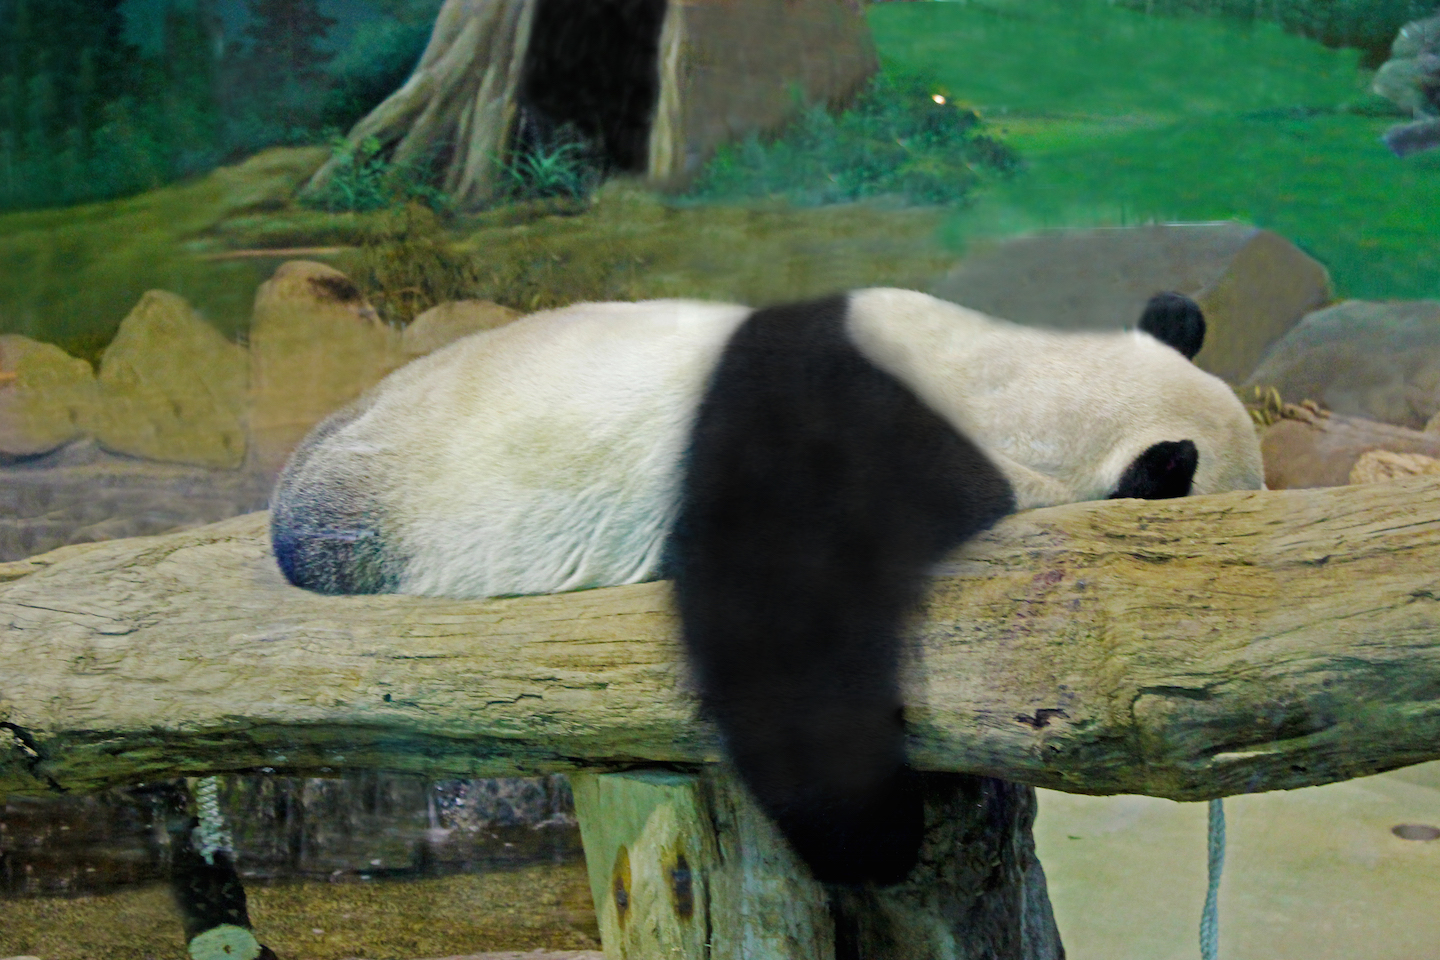 Tuan Tuan sleeping on a log at the Taipei Zoo